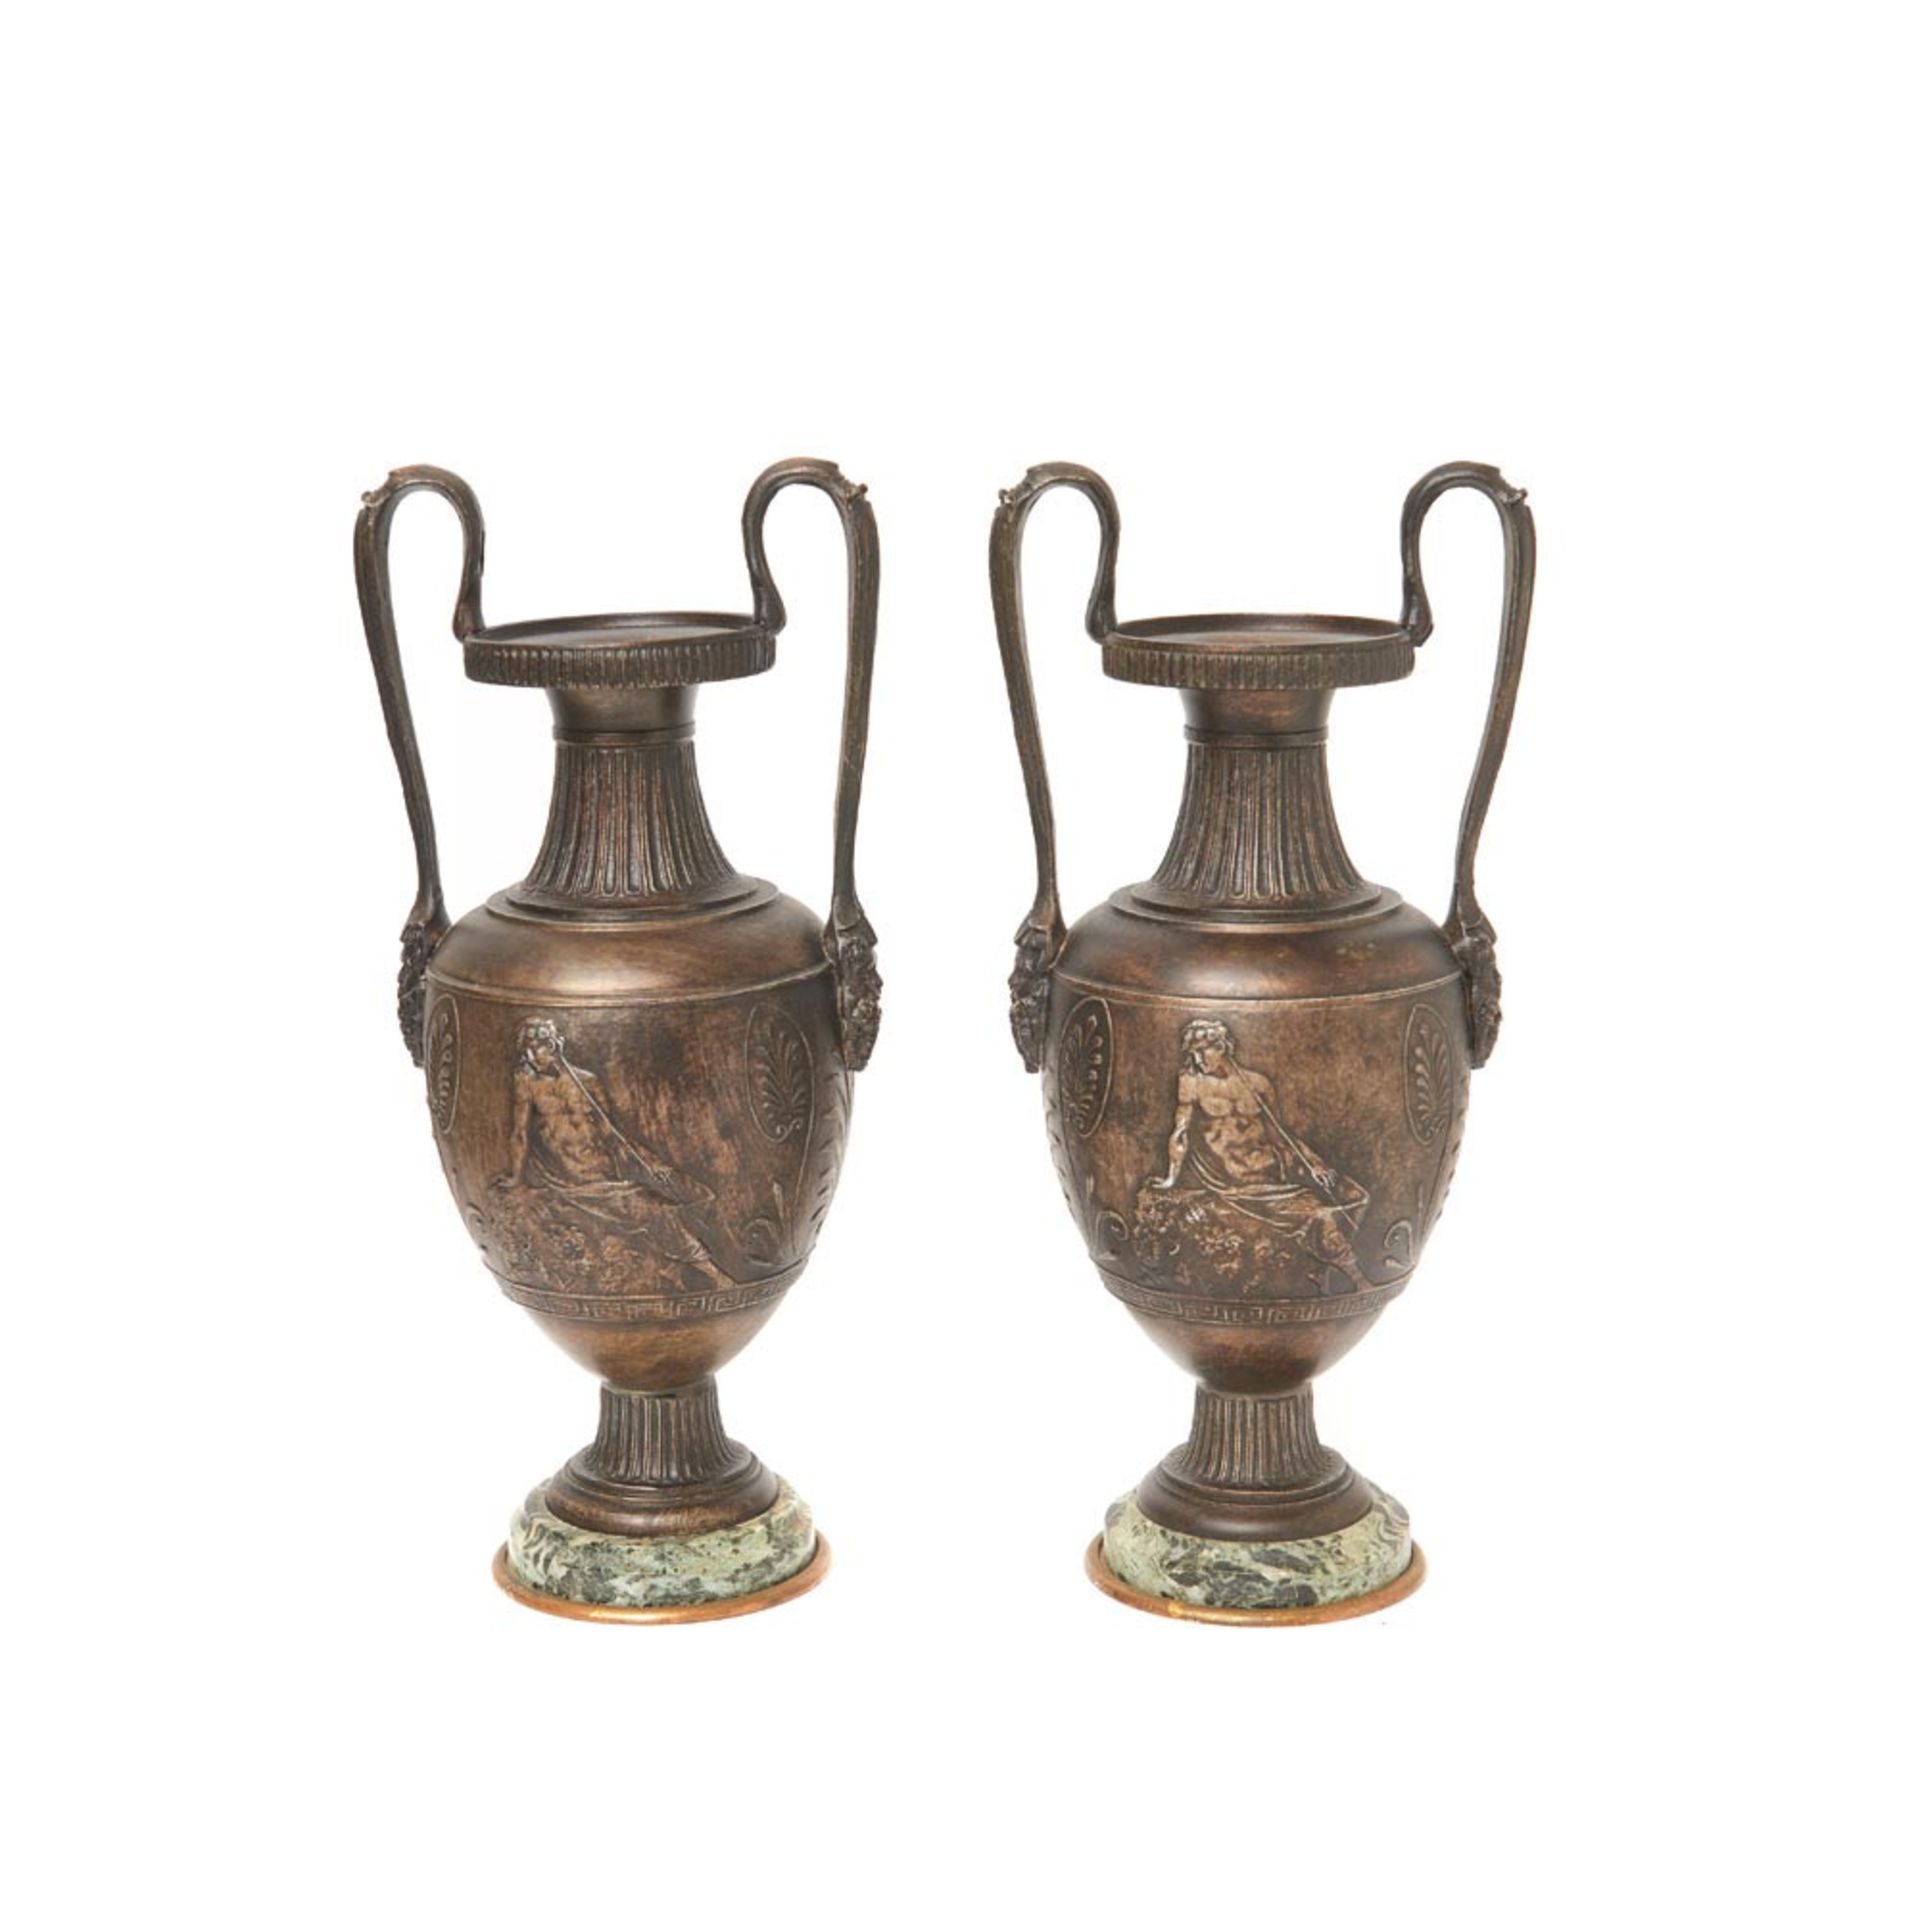 Calamine pair of jars, early 20th century